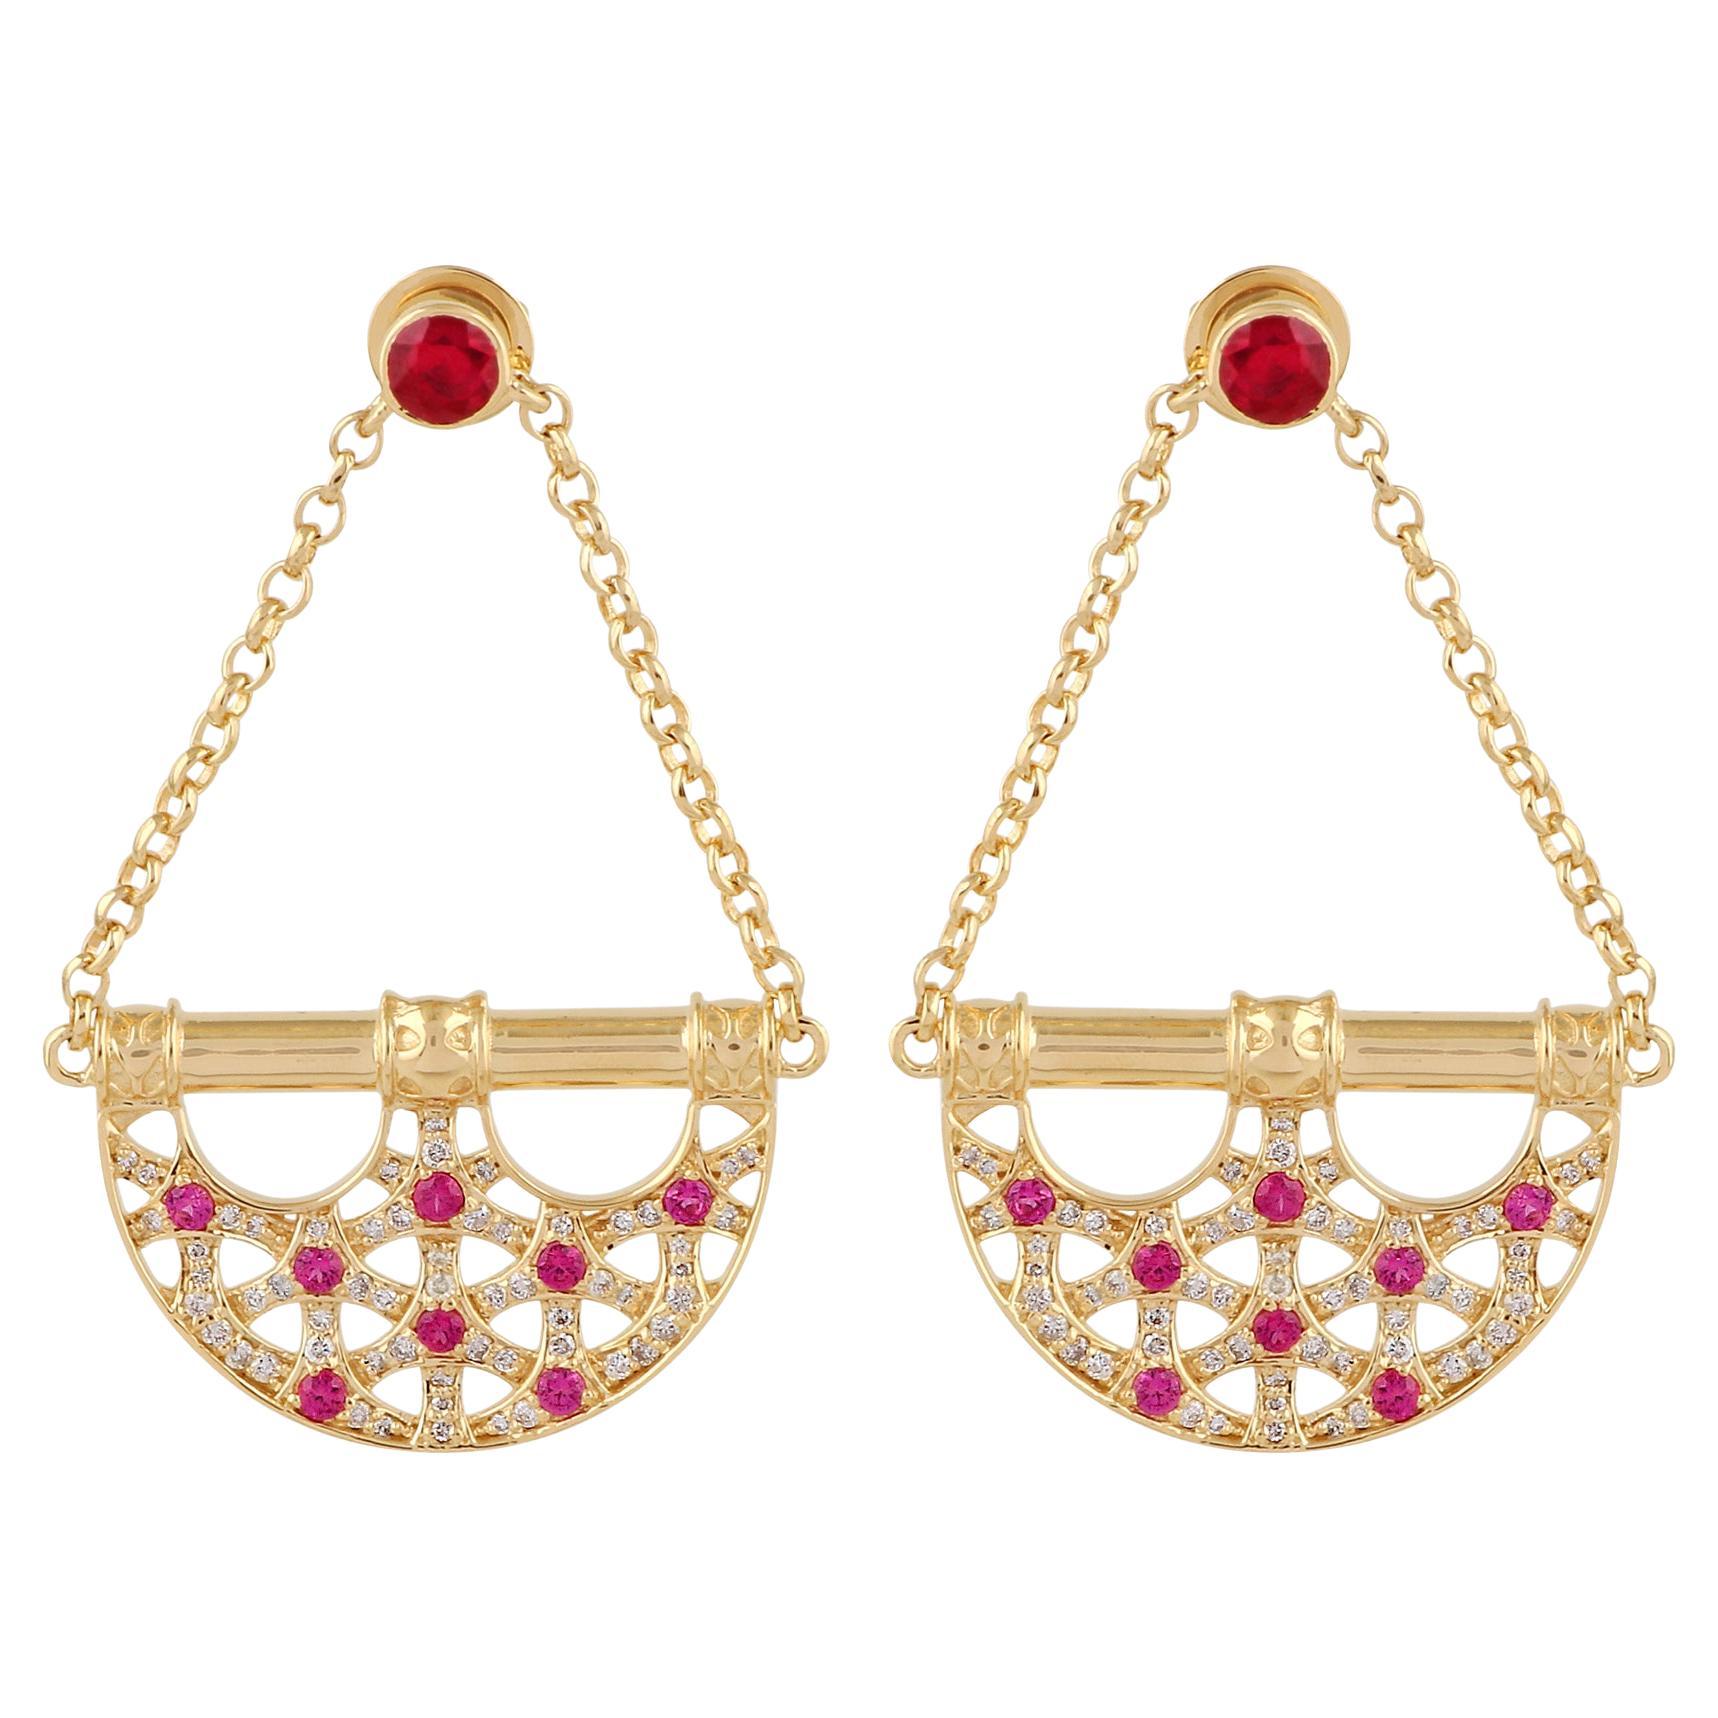 Gemstone Handbag Design Earrings Diamond 18 Karat Yellow Gold Handmade Jewelry For Sale